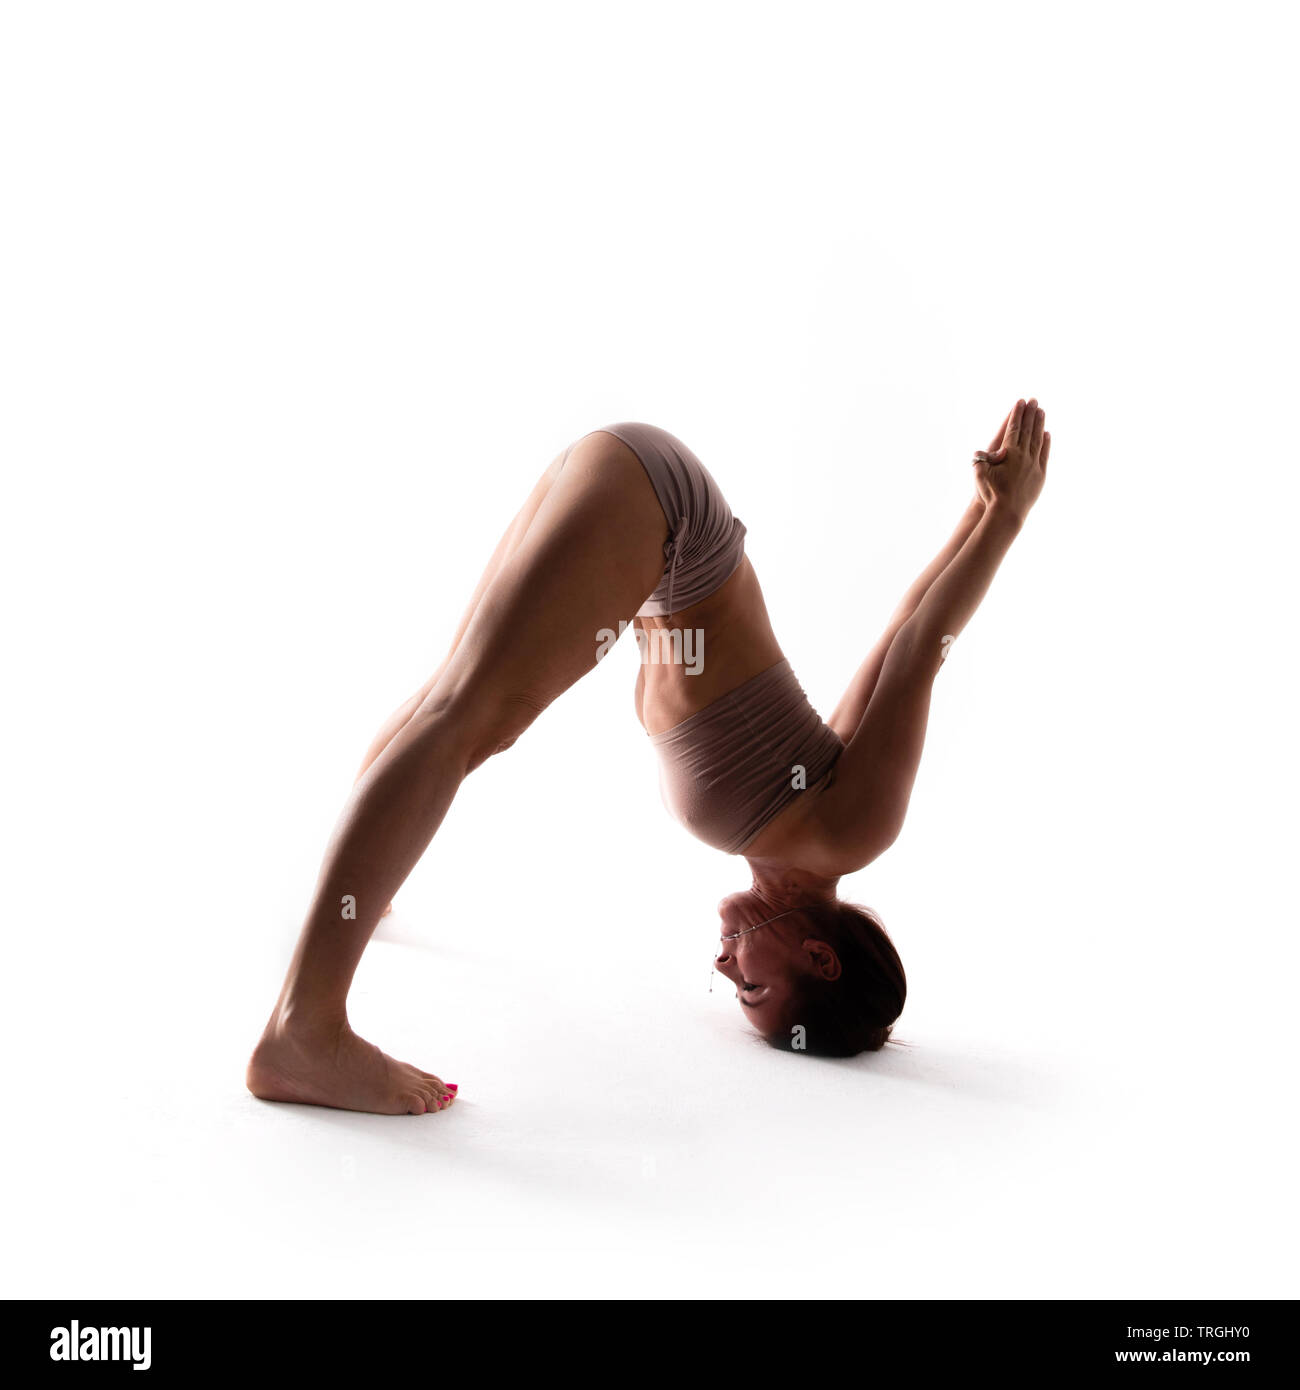 960 Yoga Y Images, Stock Photos & Vectors | Shutterstock